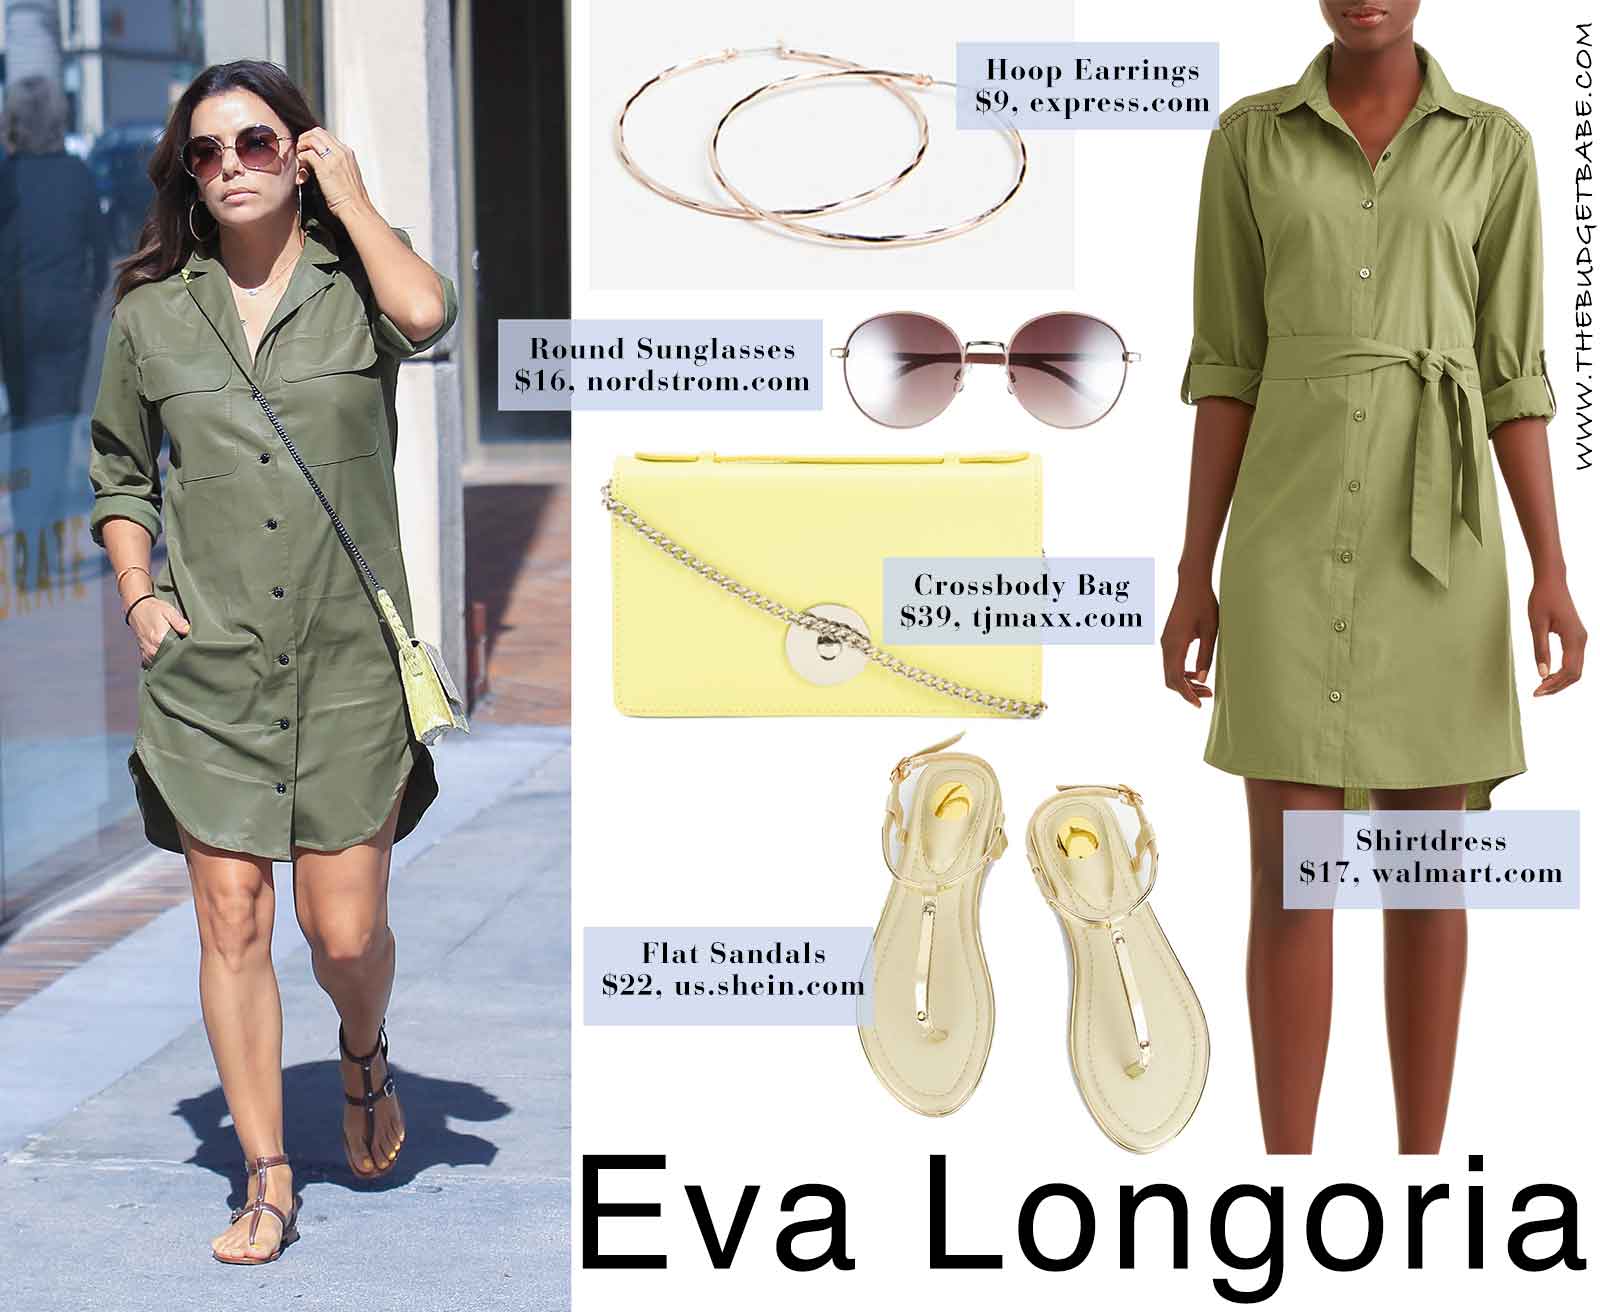 Eva Longoria's shirtdress style for summer - love this